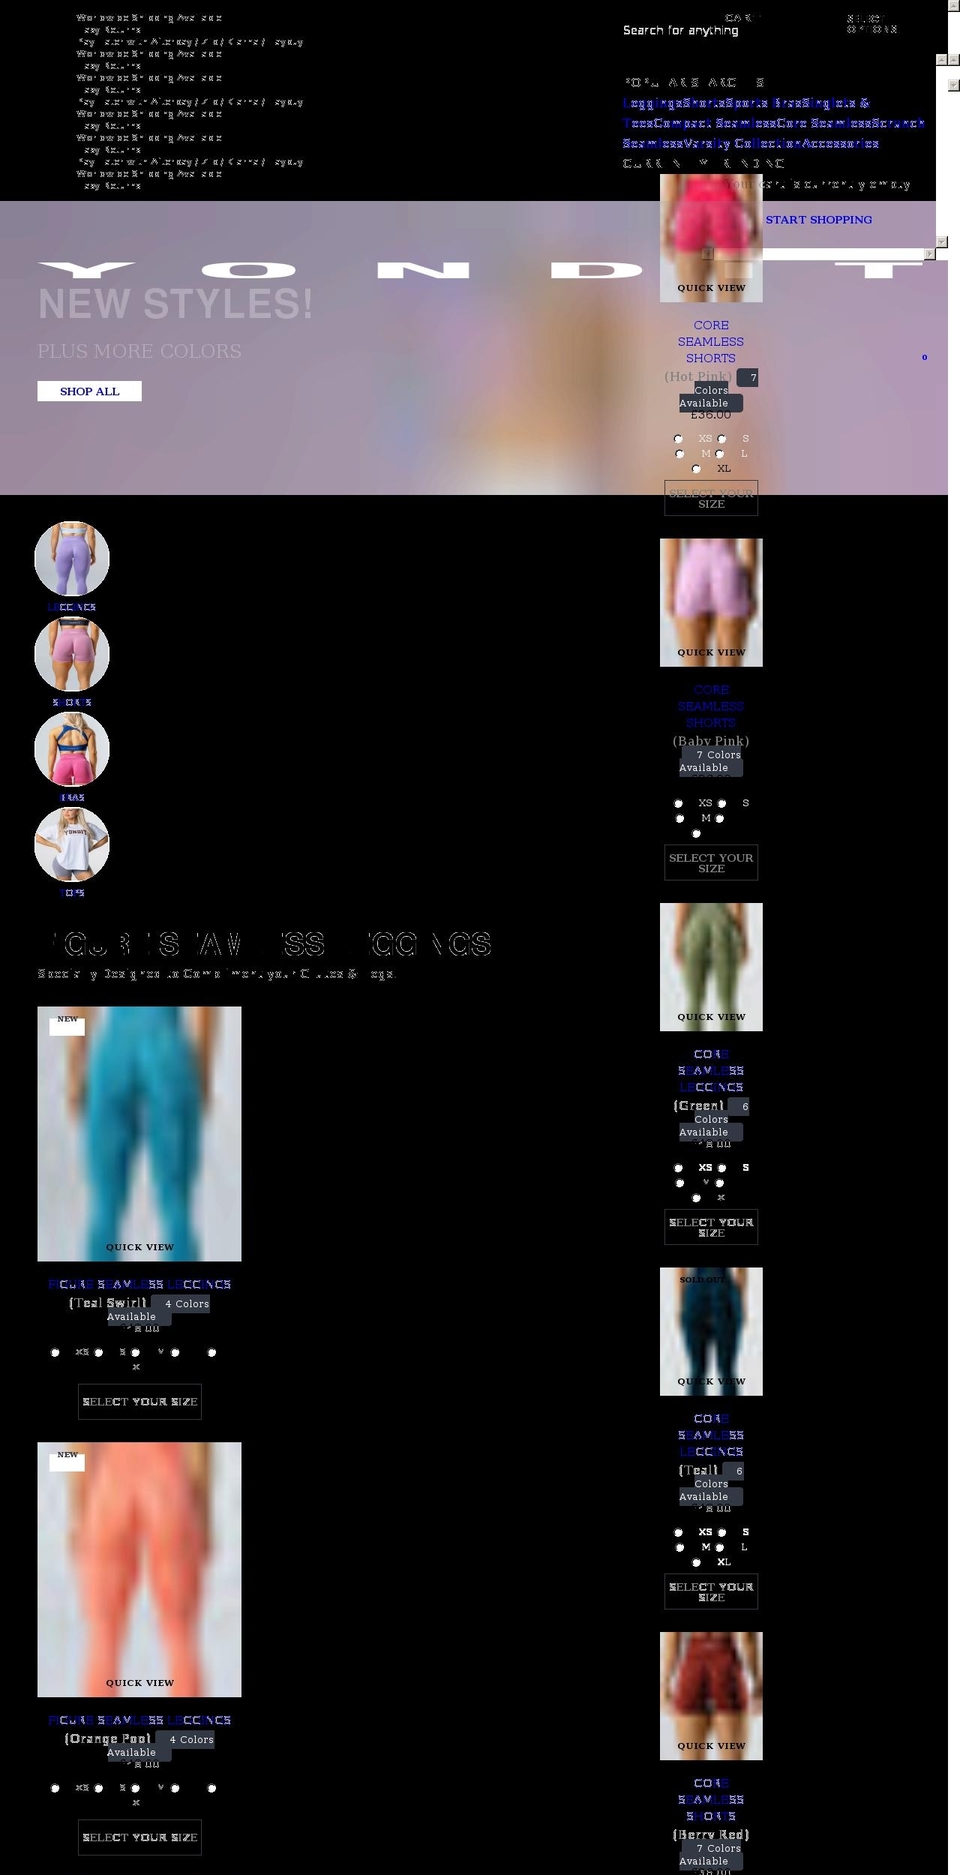 uk.yondit.com shopify website screenshot